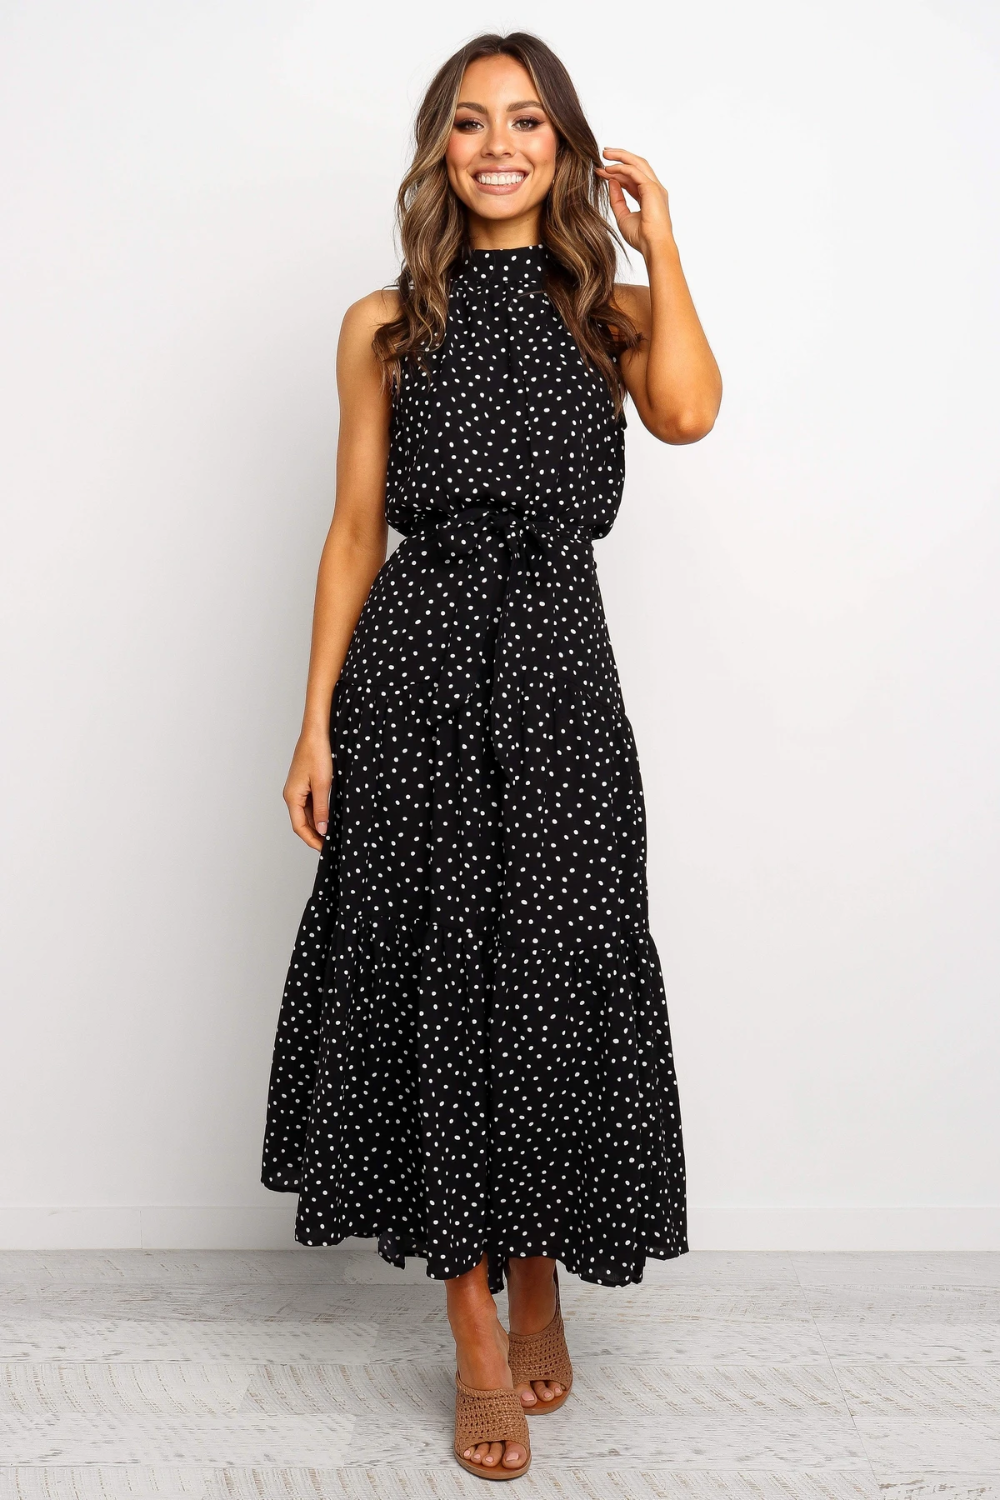 Adaline Dress - Black - Adaline Dress - Black -   16 style Women dress ideas